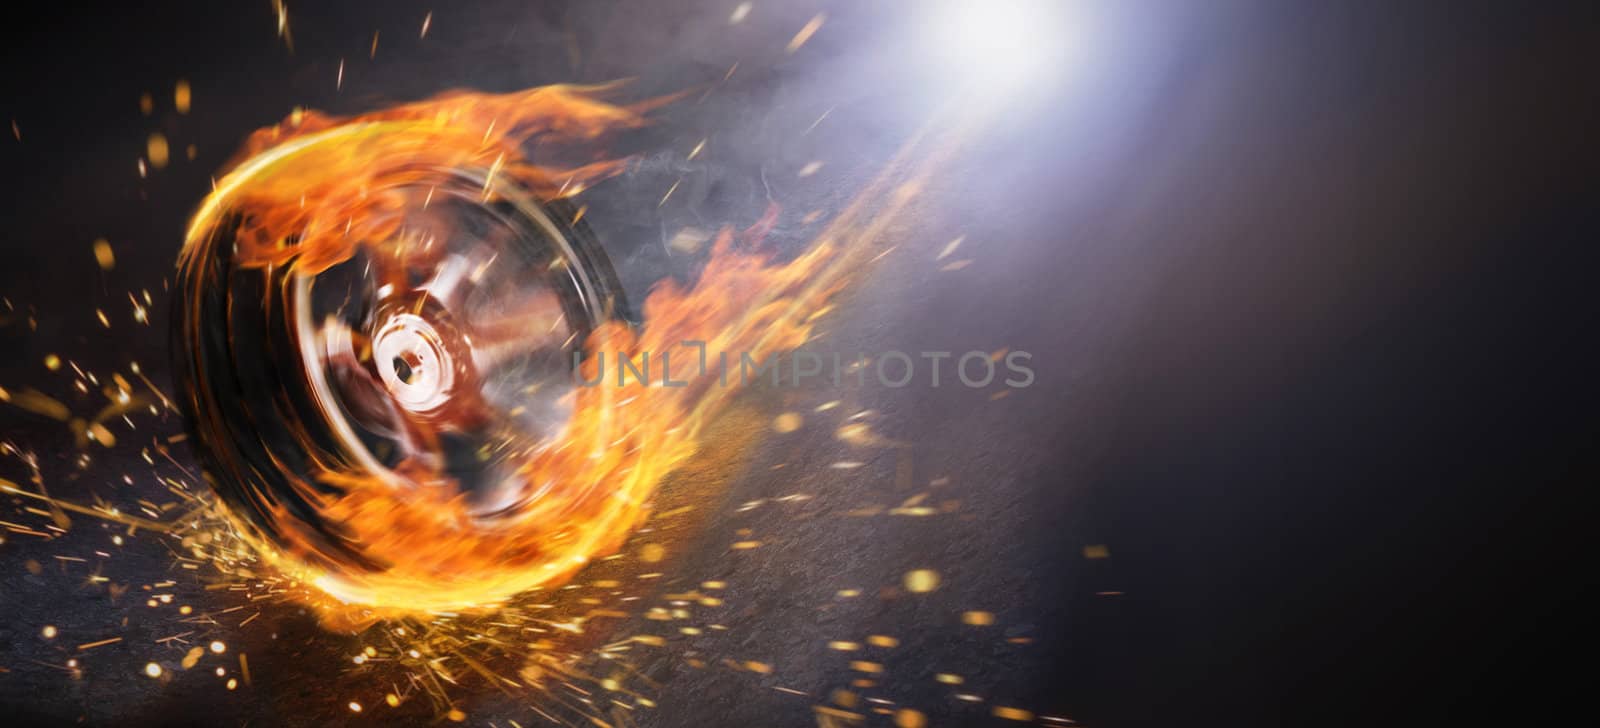 A spinning wheel dash forward on fire